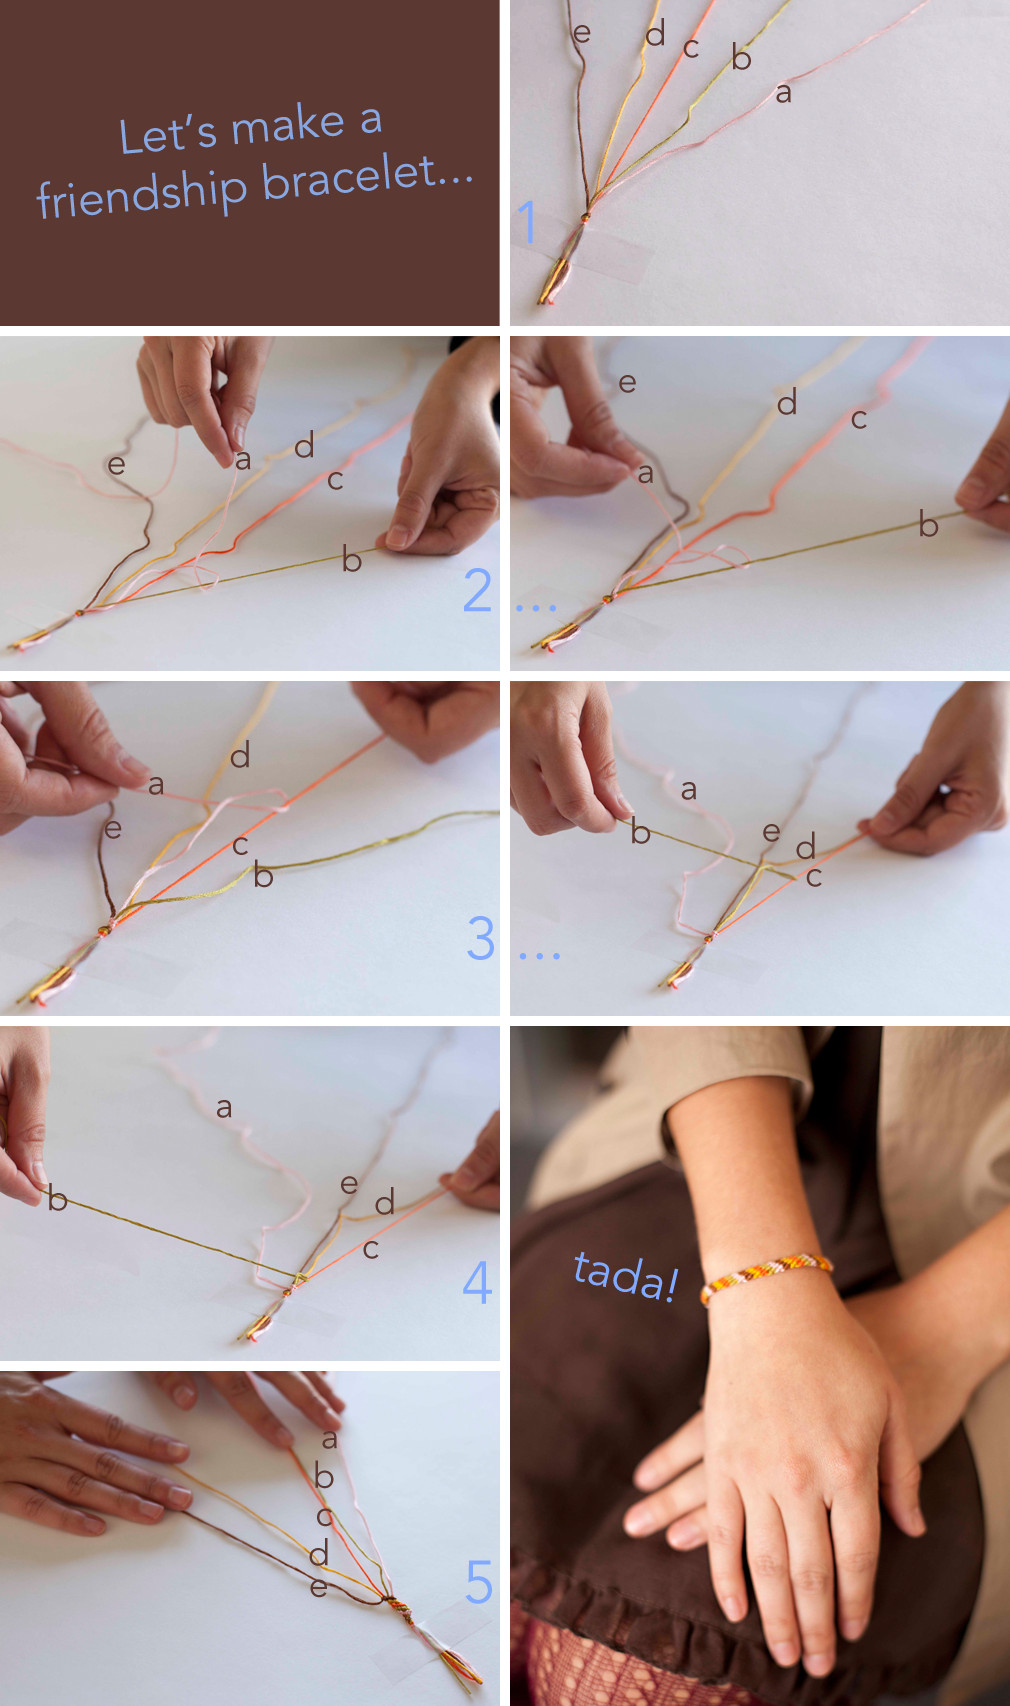 Best ideas about Friendship Bracelets DIY
. Save or Pin Friendship Bracelet DIY Now.